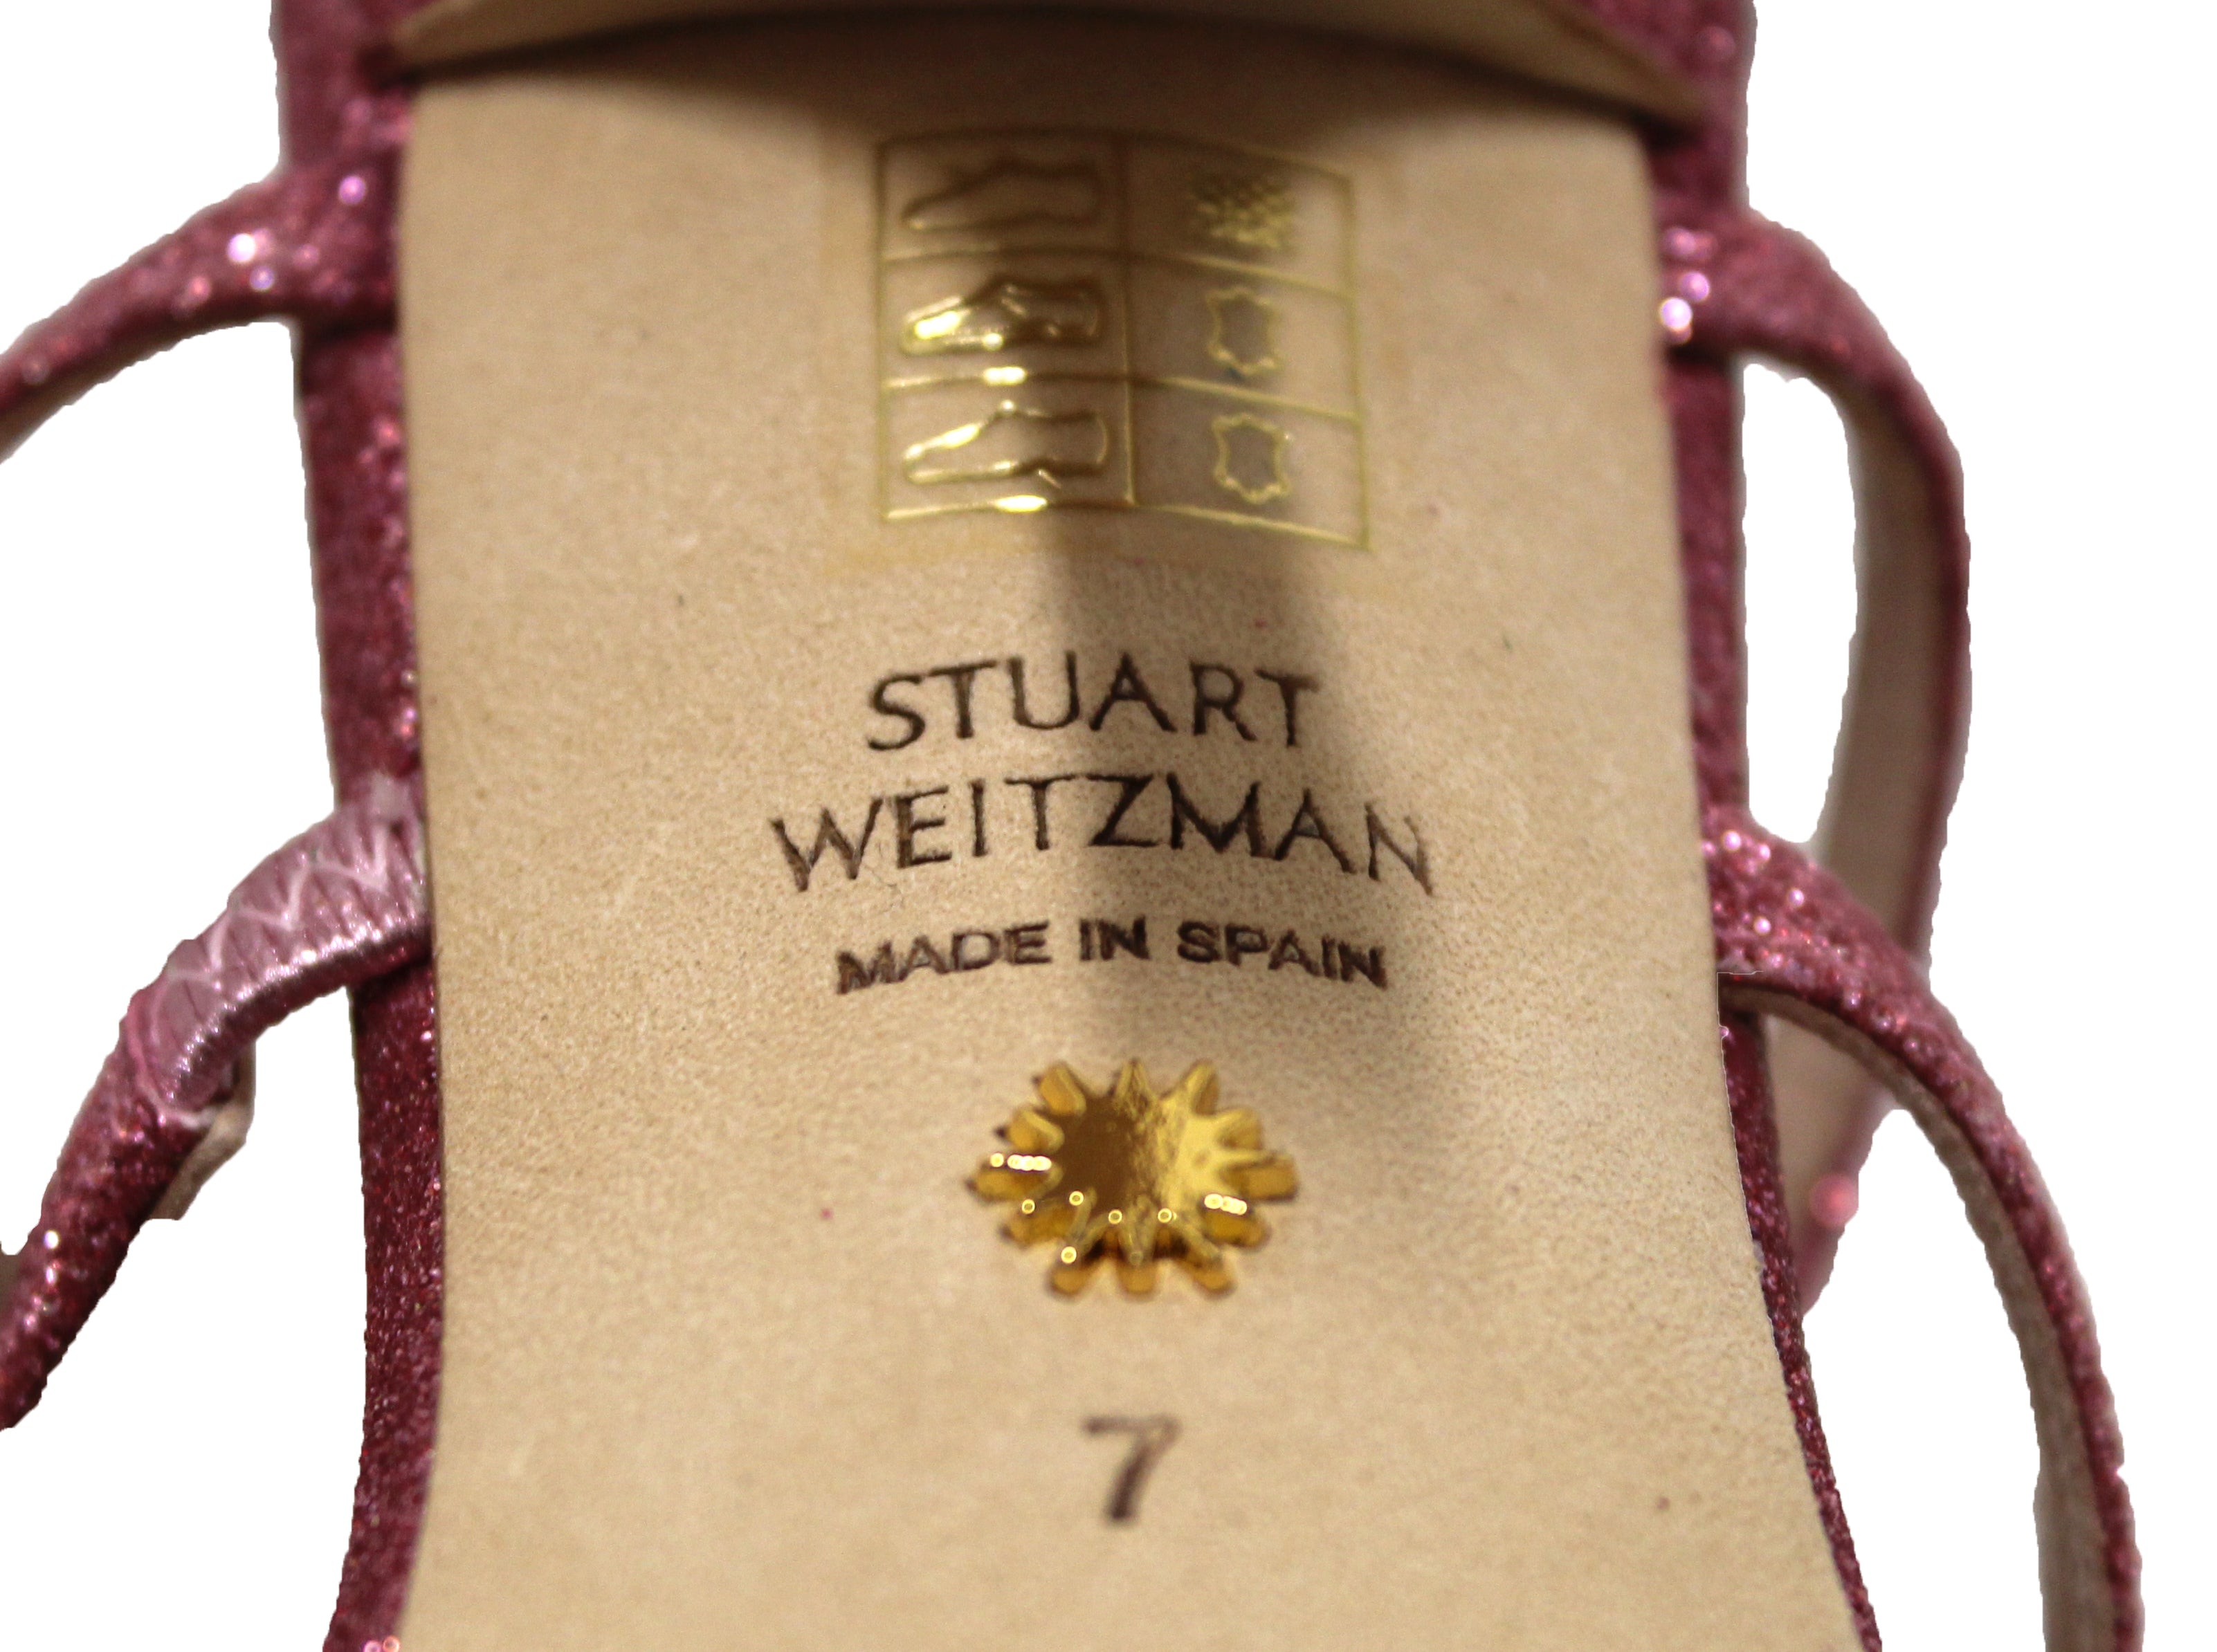 Authentic NEW Stuart Weitzman Glitter Pink Julina High-Heel Strappy Sandals